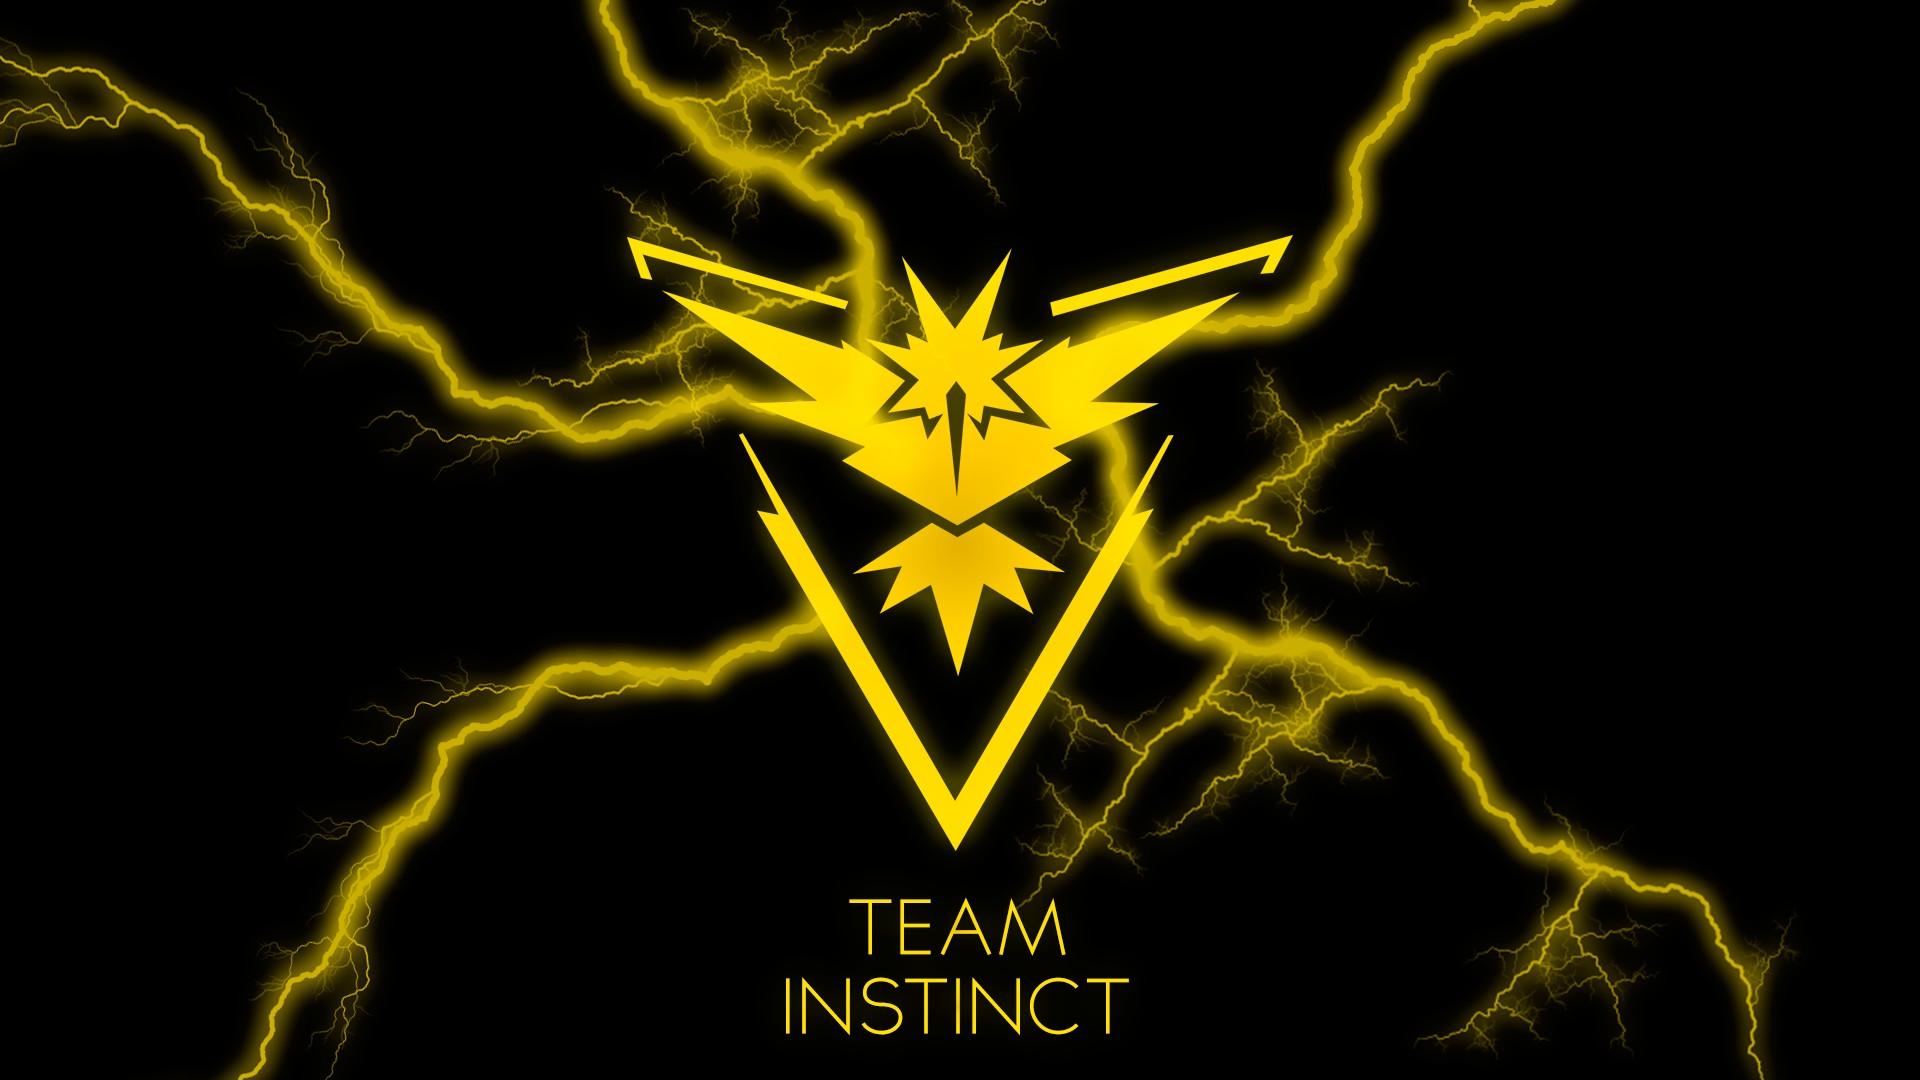 Team Instinct Wallpaper, Picture